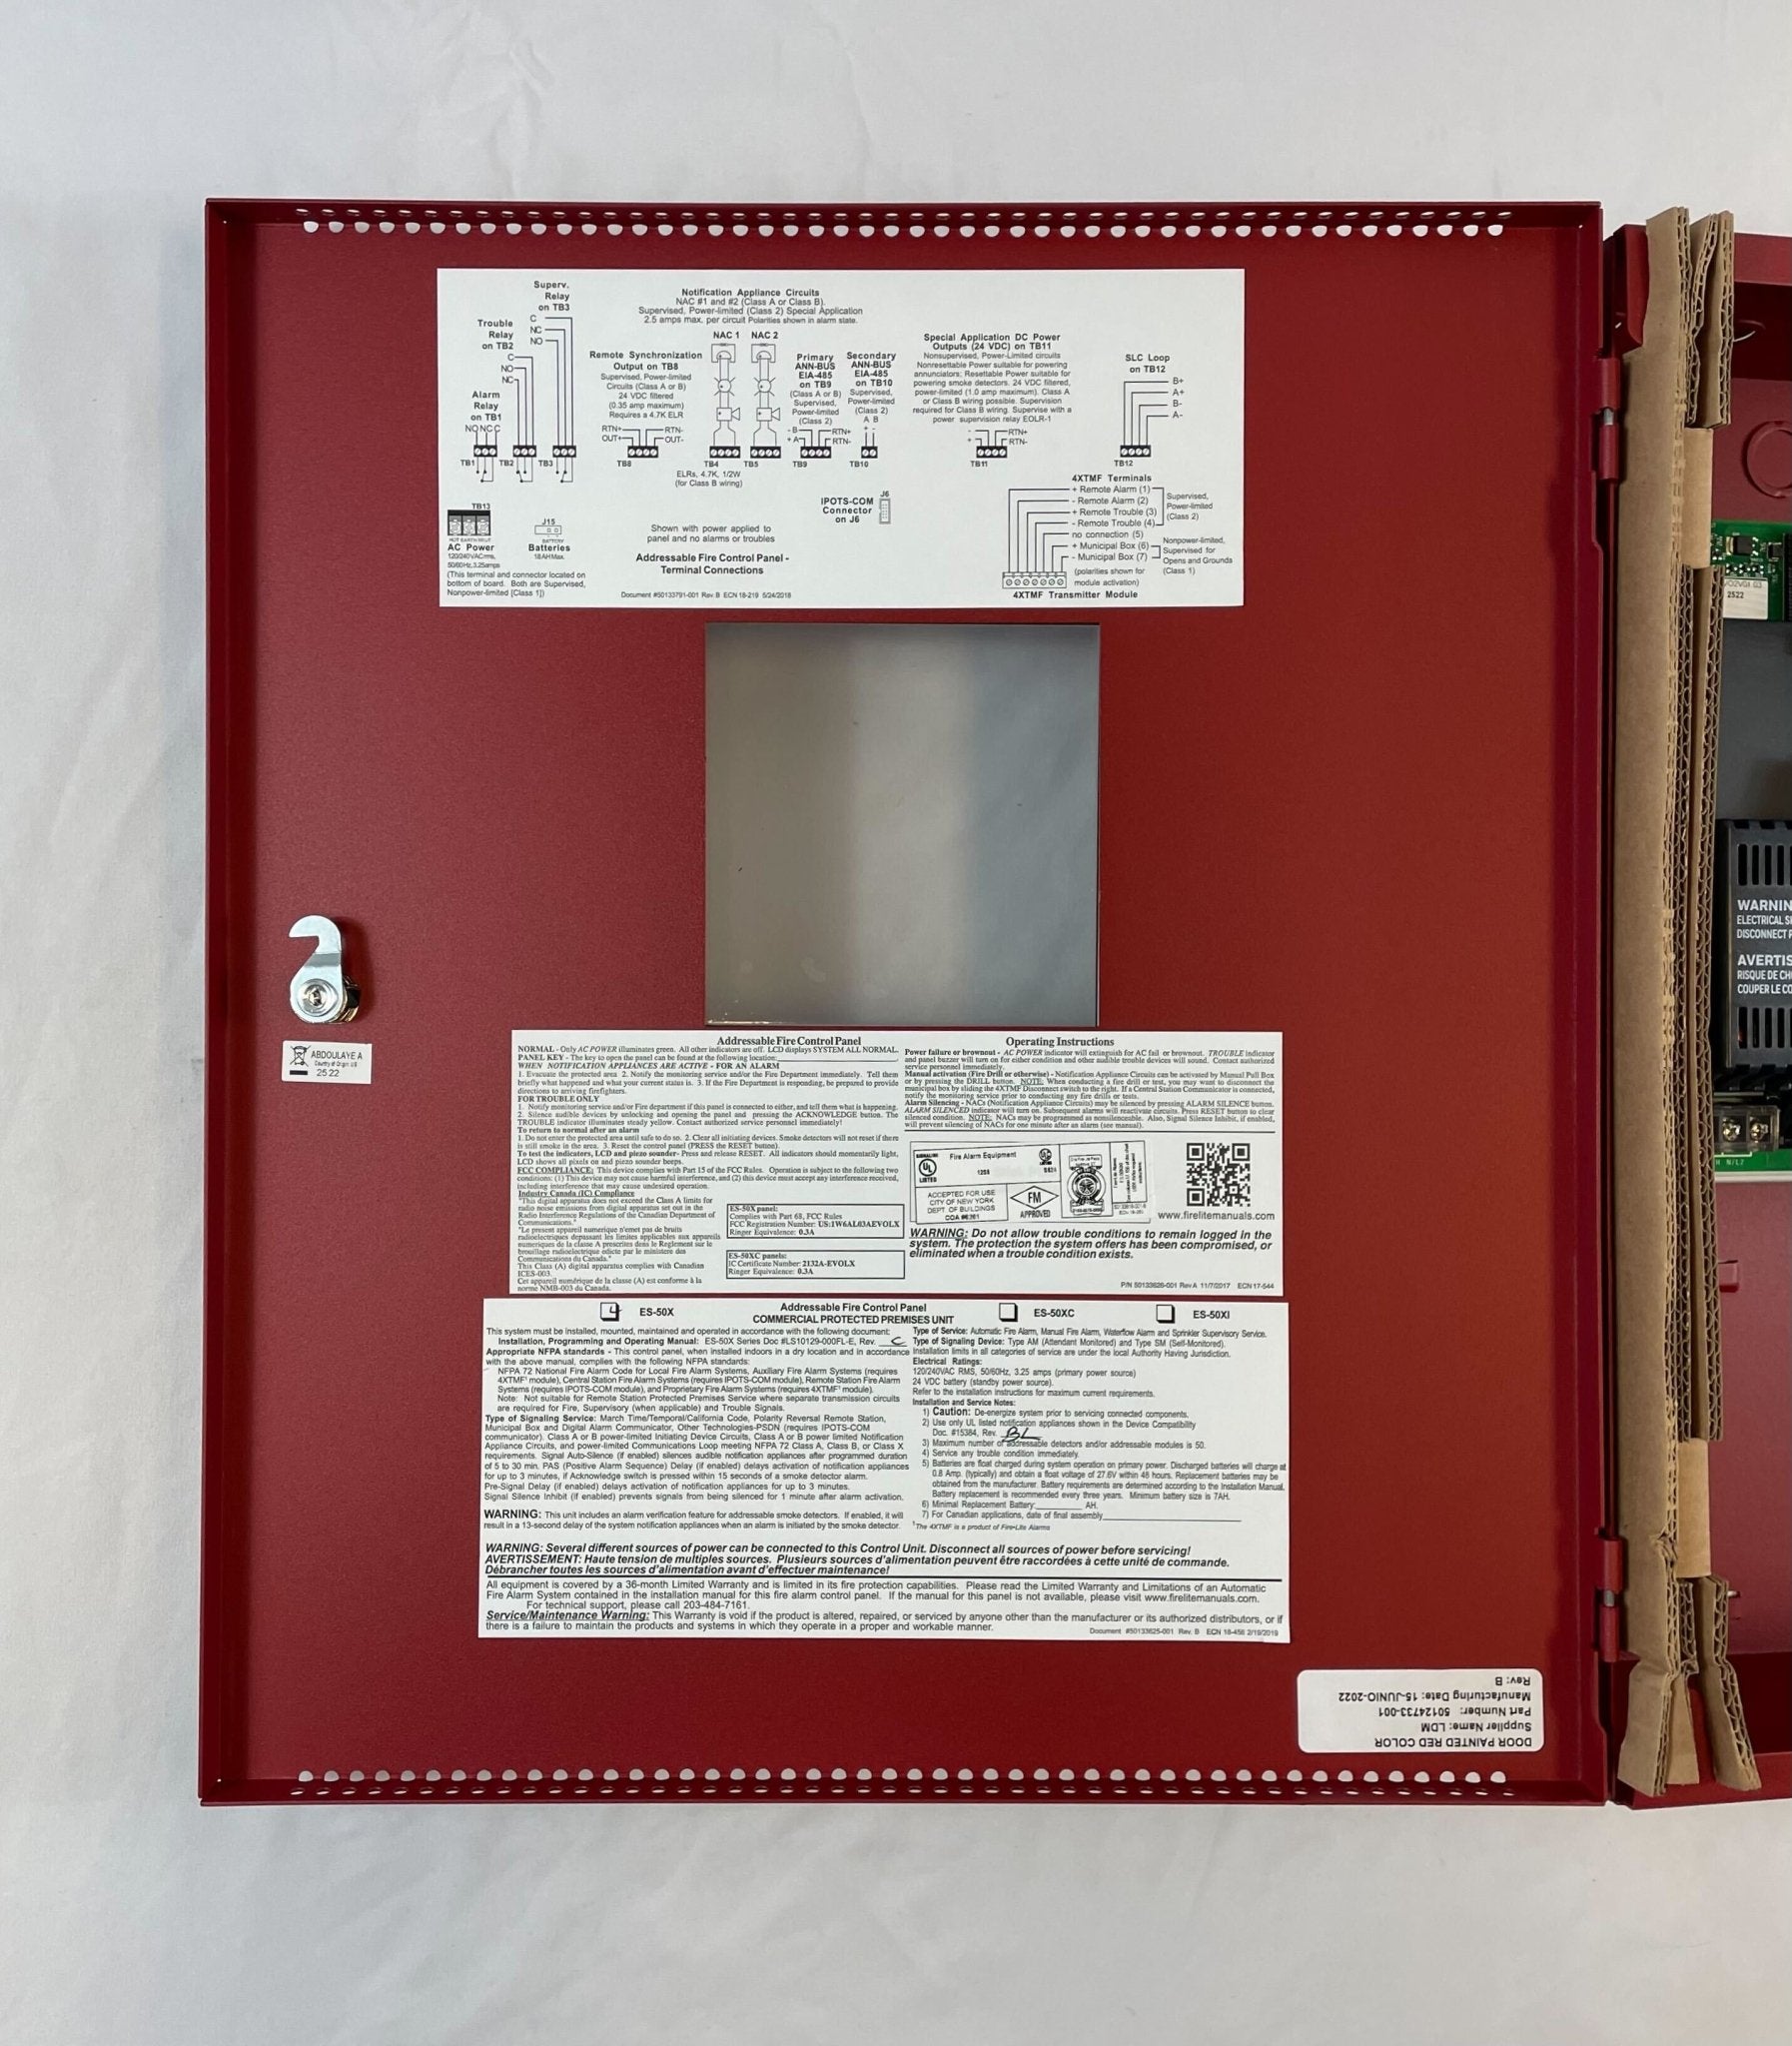 Firelite ES-50X - The Fire Alarm Supplier